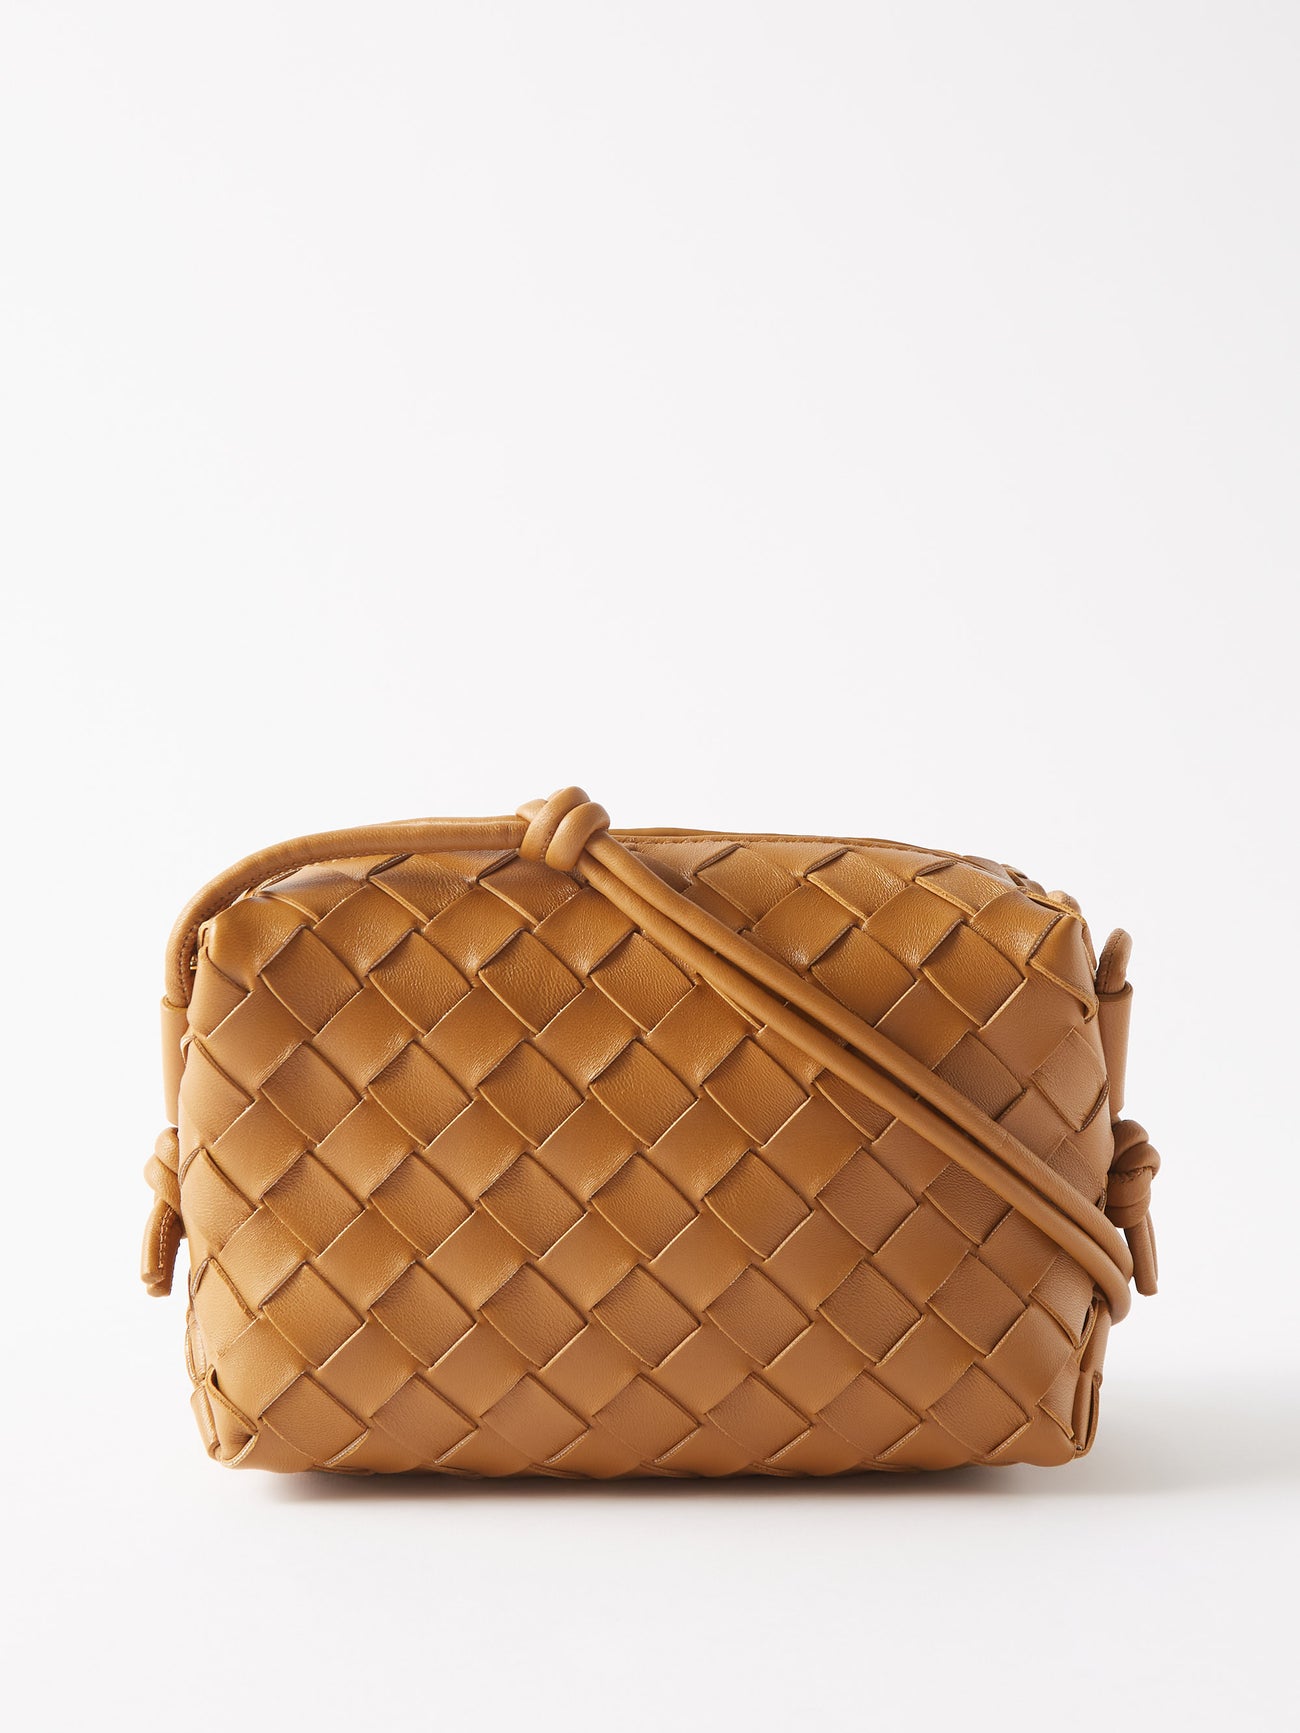 Loop Fashion Leather - Handbags